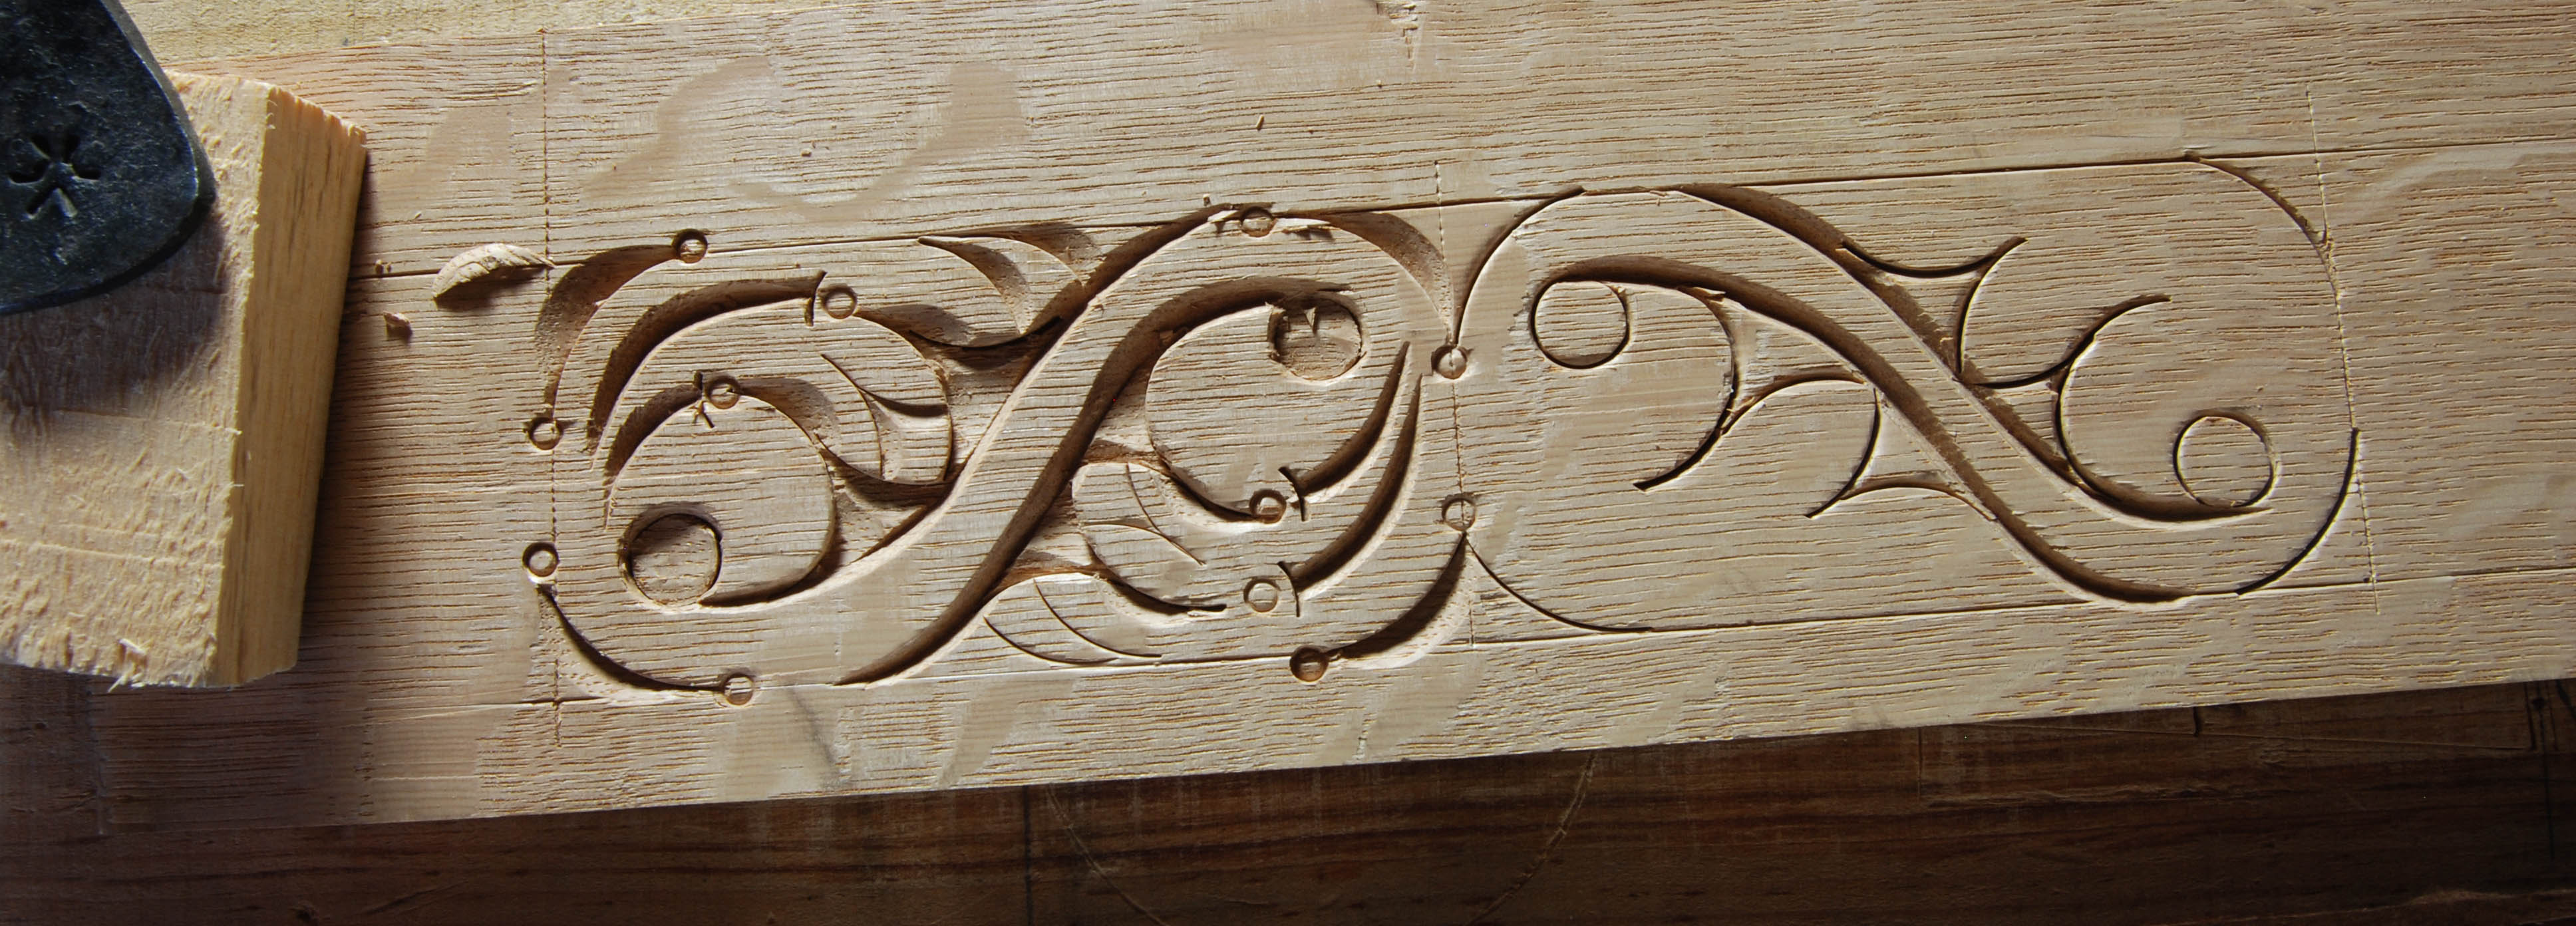 Dremel Wood Carving Patterns Free